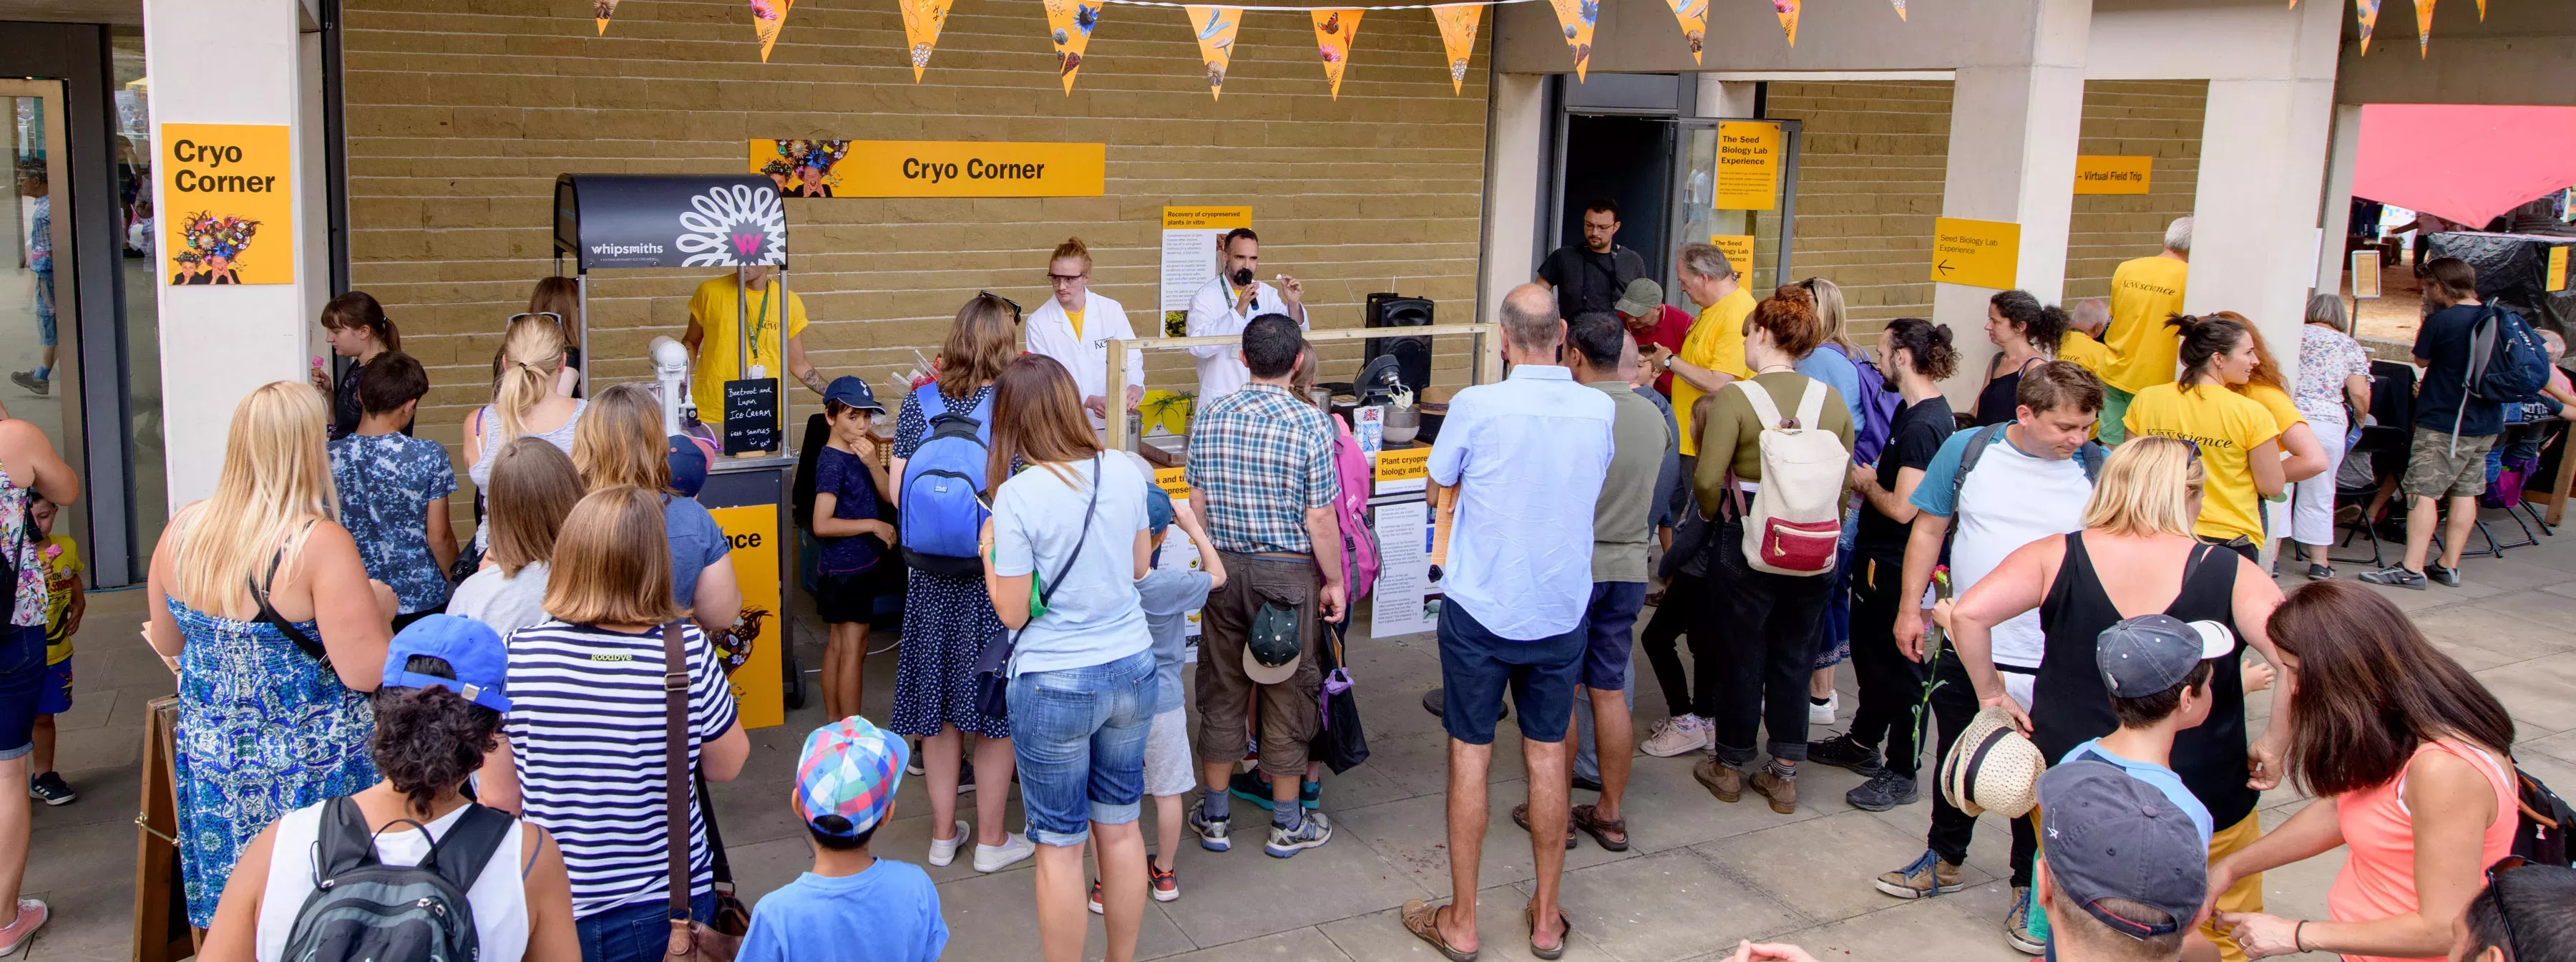 Crowd standing around Cryo corner at Kew Science festival